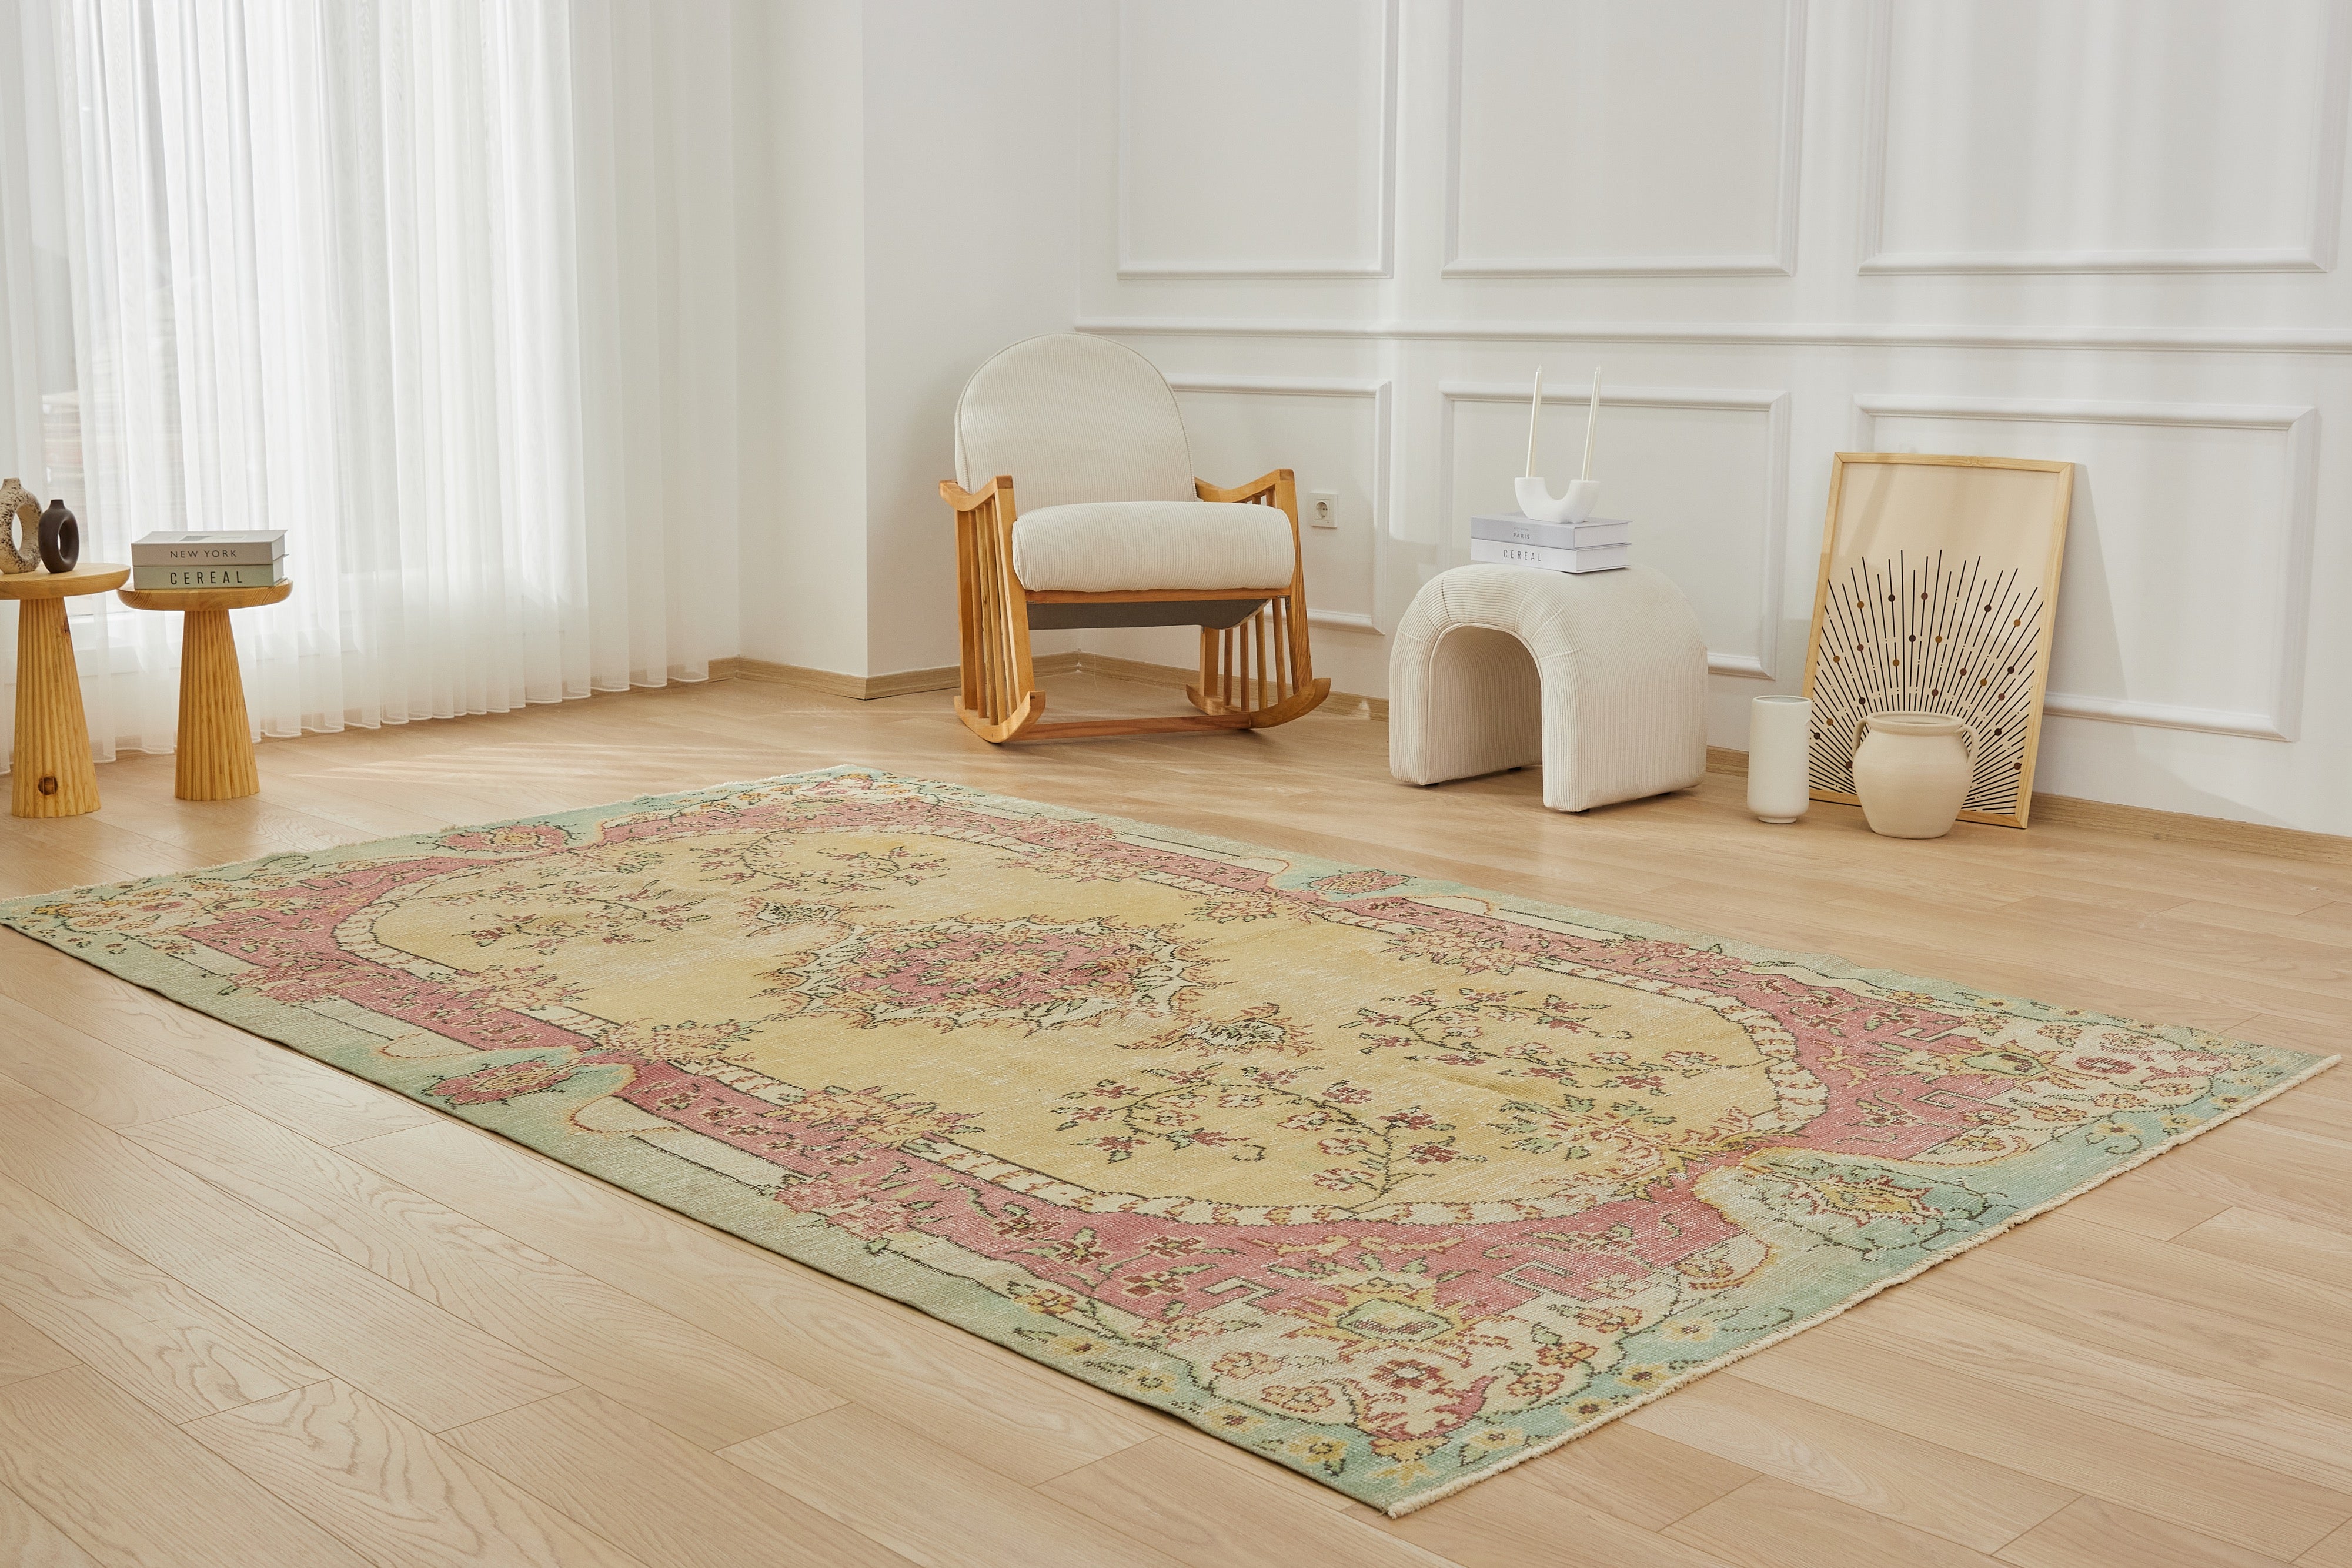 Antique washed Vibrance - Milah's Professional Carpet Design